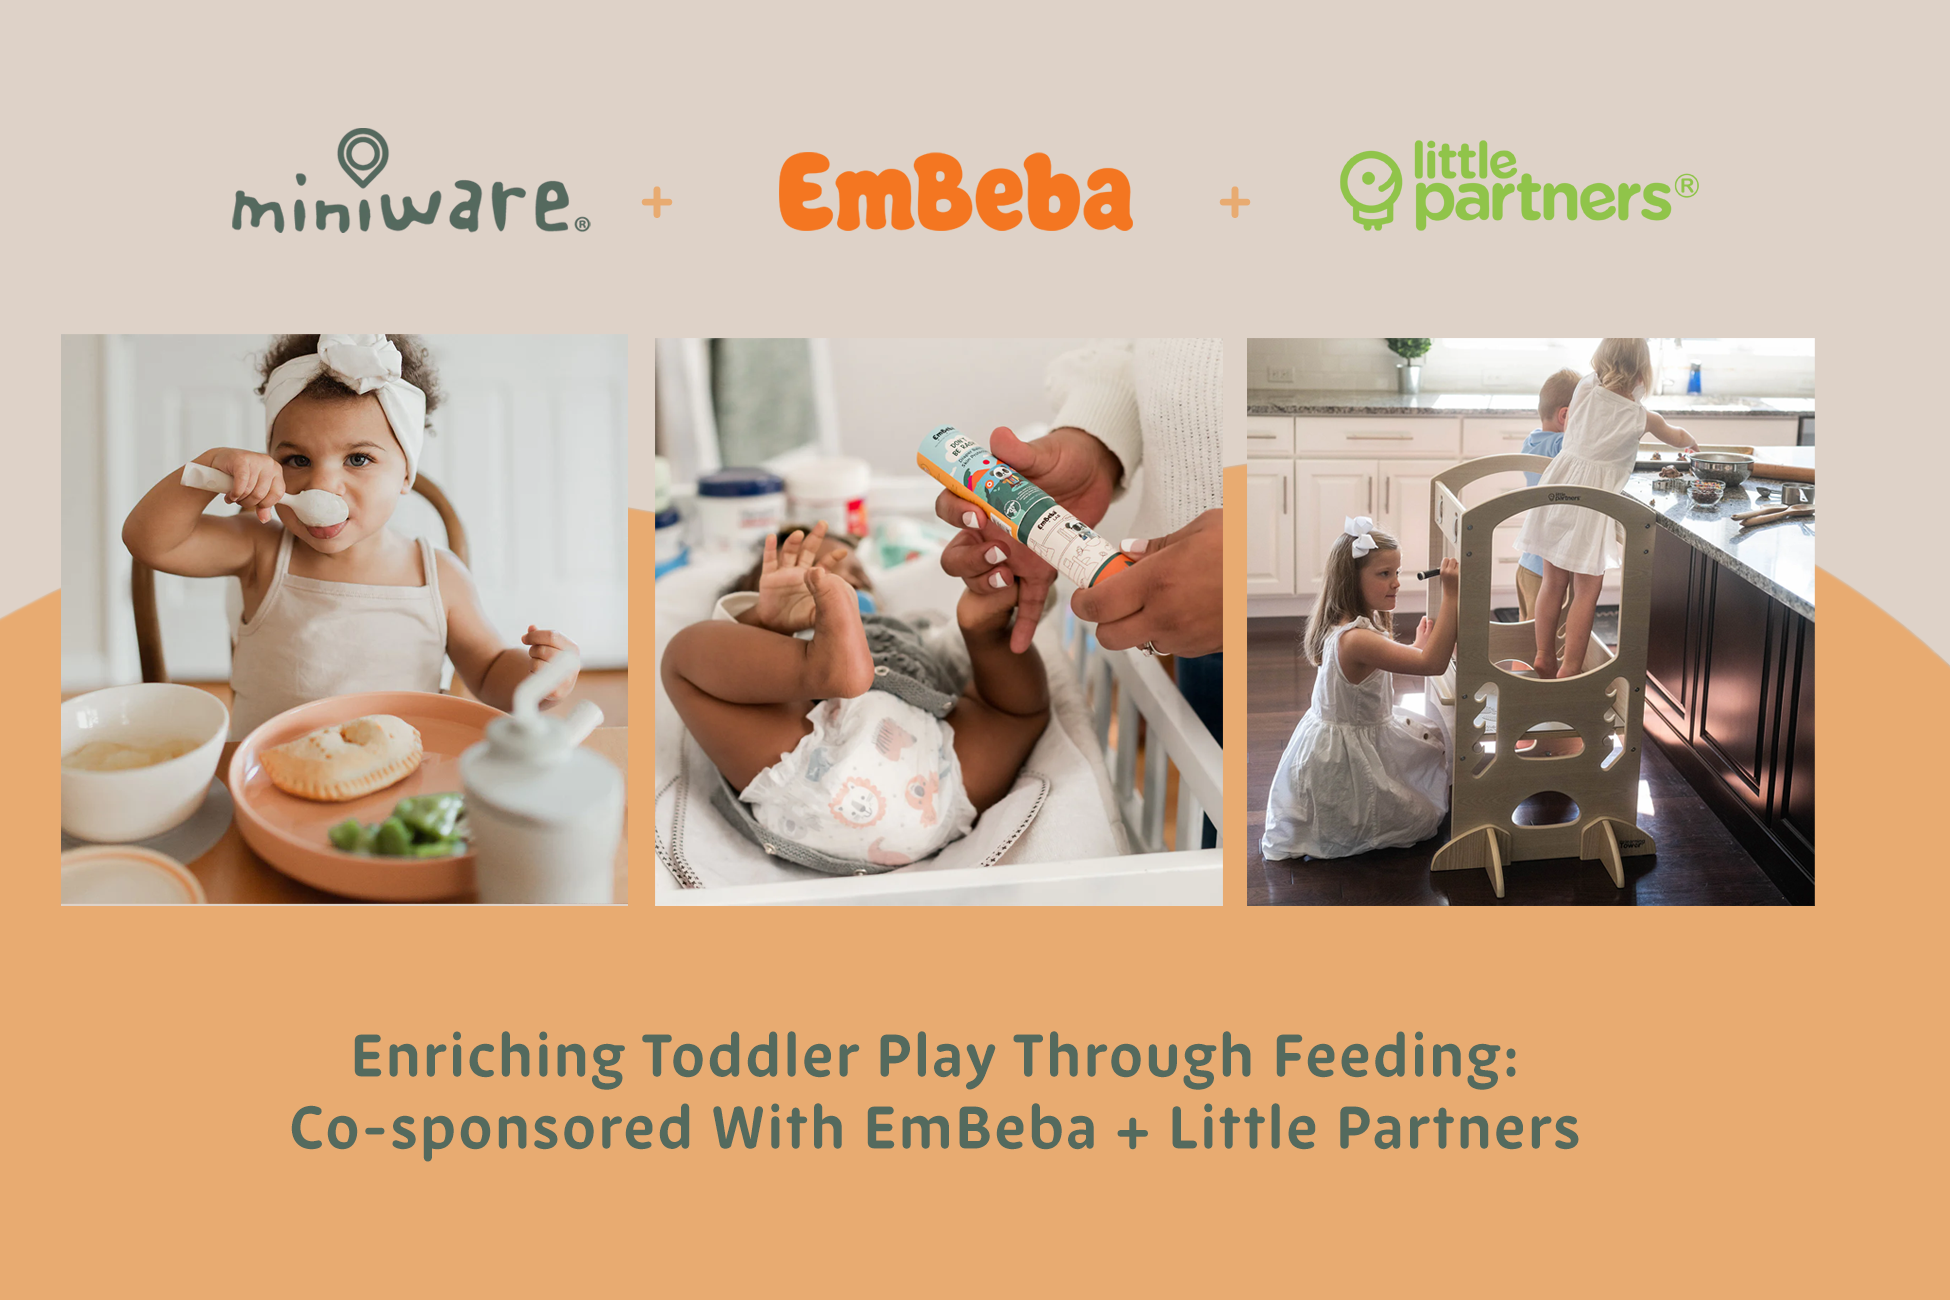 Enriching Toddler Play Through Feeding: Co-sponsored With EmBeba + Little Partners